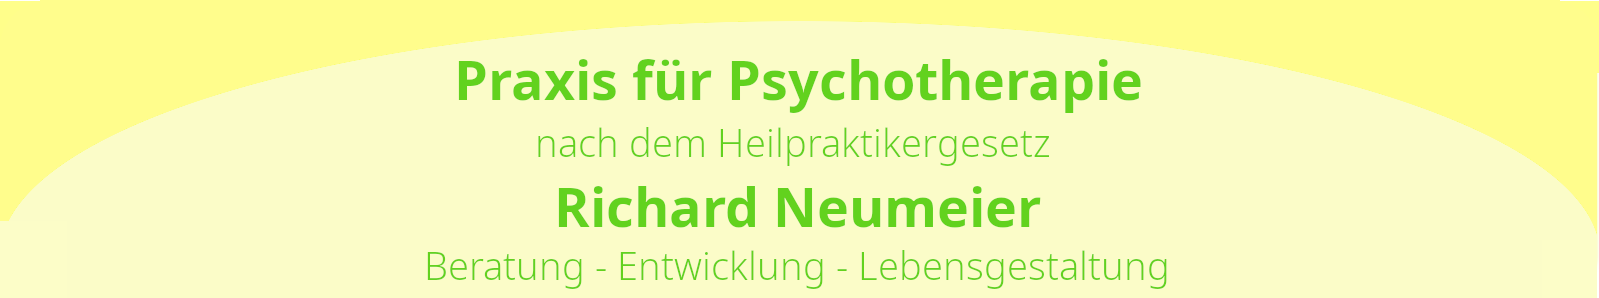 Psychotherapeutische Praxis Richard Neumeier